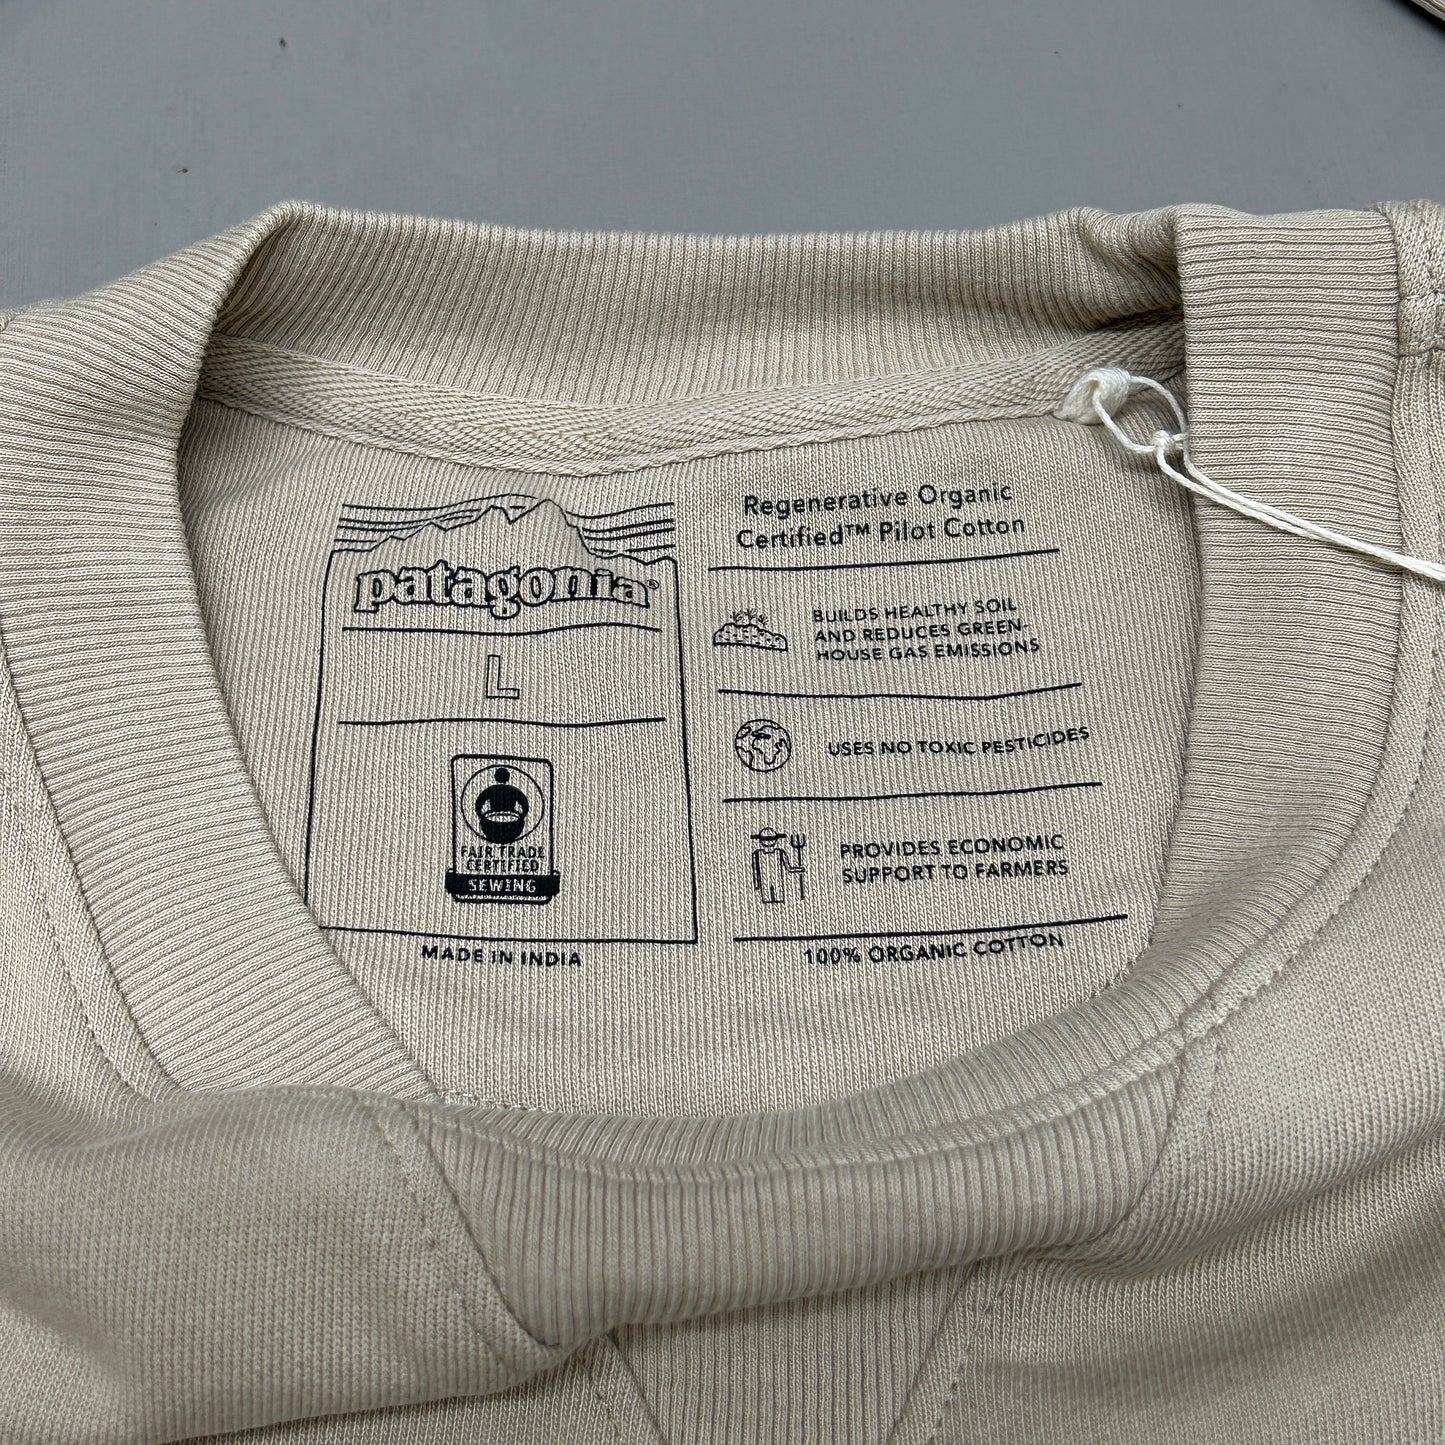 PATAGONIA Regenerative Organic Cotton Crewneck Sweatshirt Sz L Oar Tan (New)